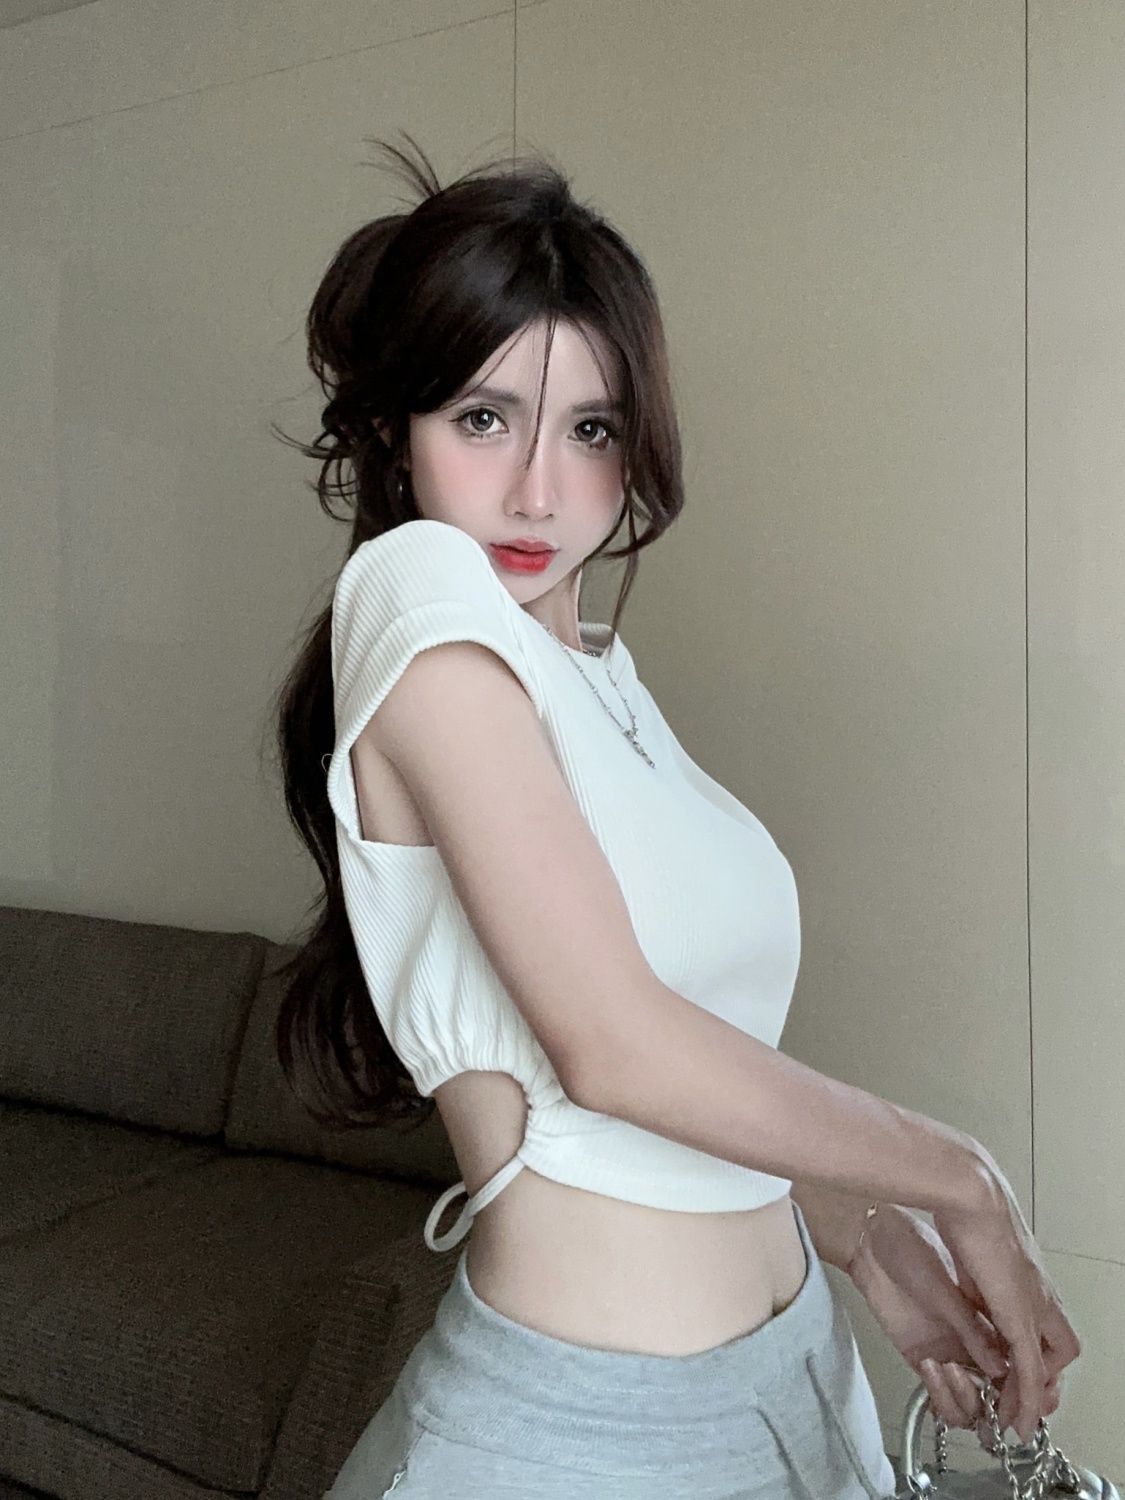 VIBRATE Korean version of sweet hot girl backless short top women's summer design sense of waist strapping shoulder short-sleeved T-shirt